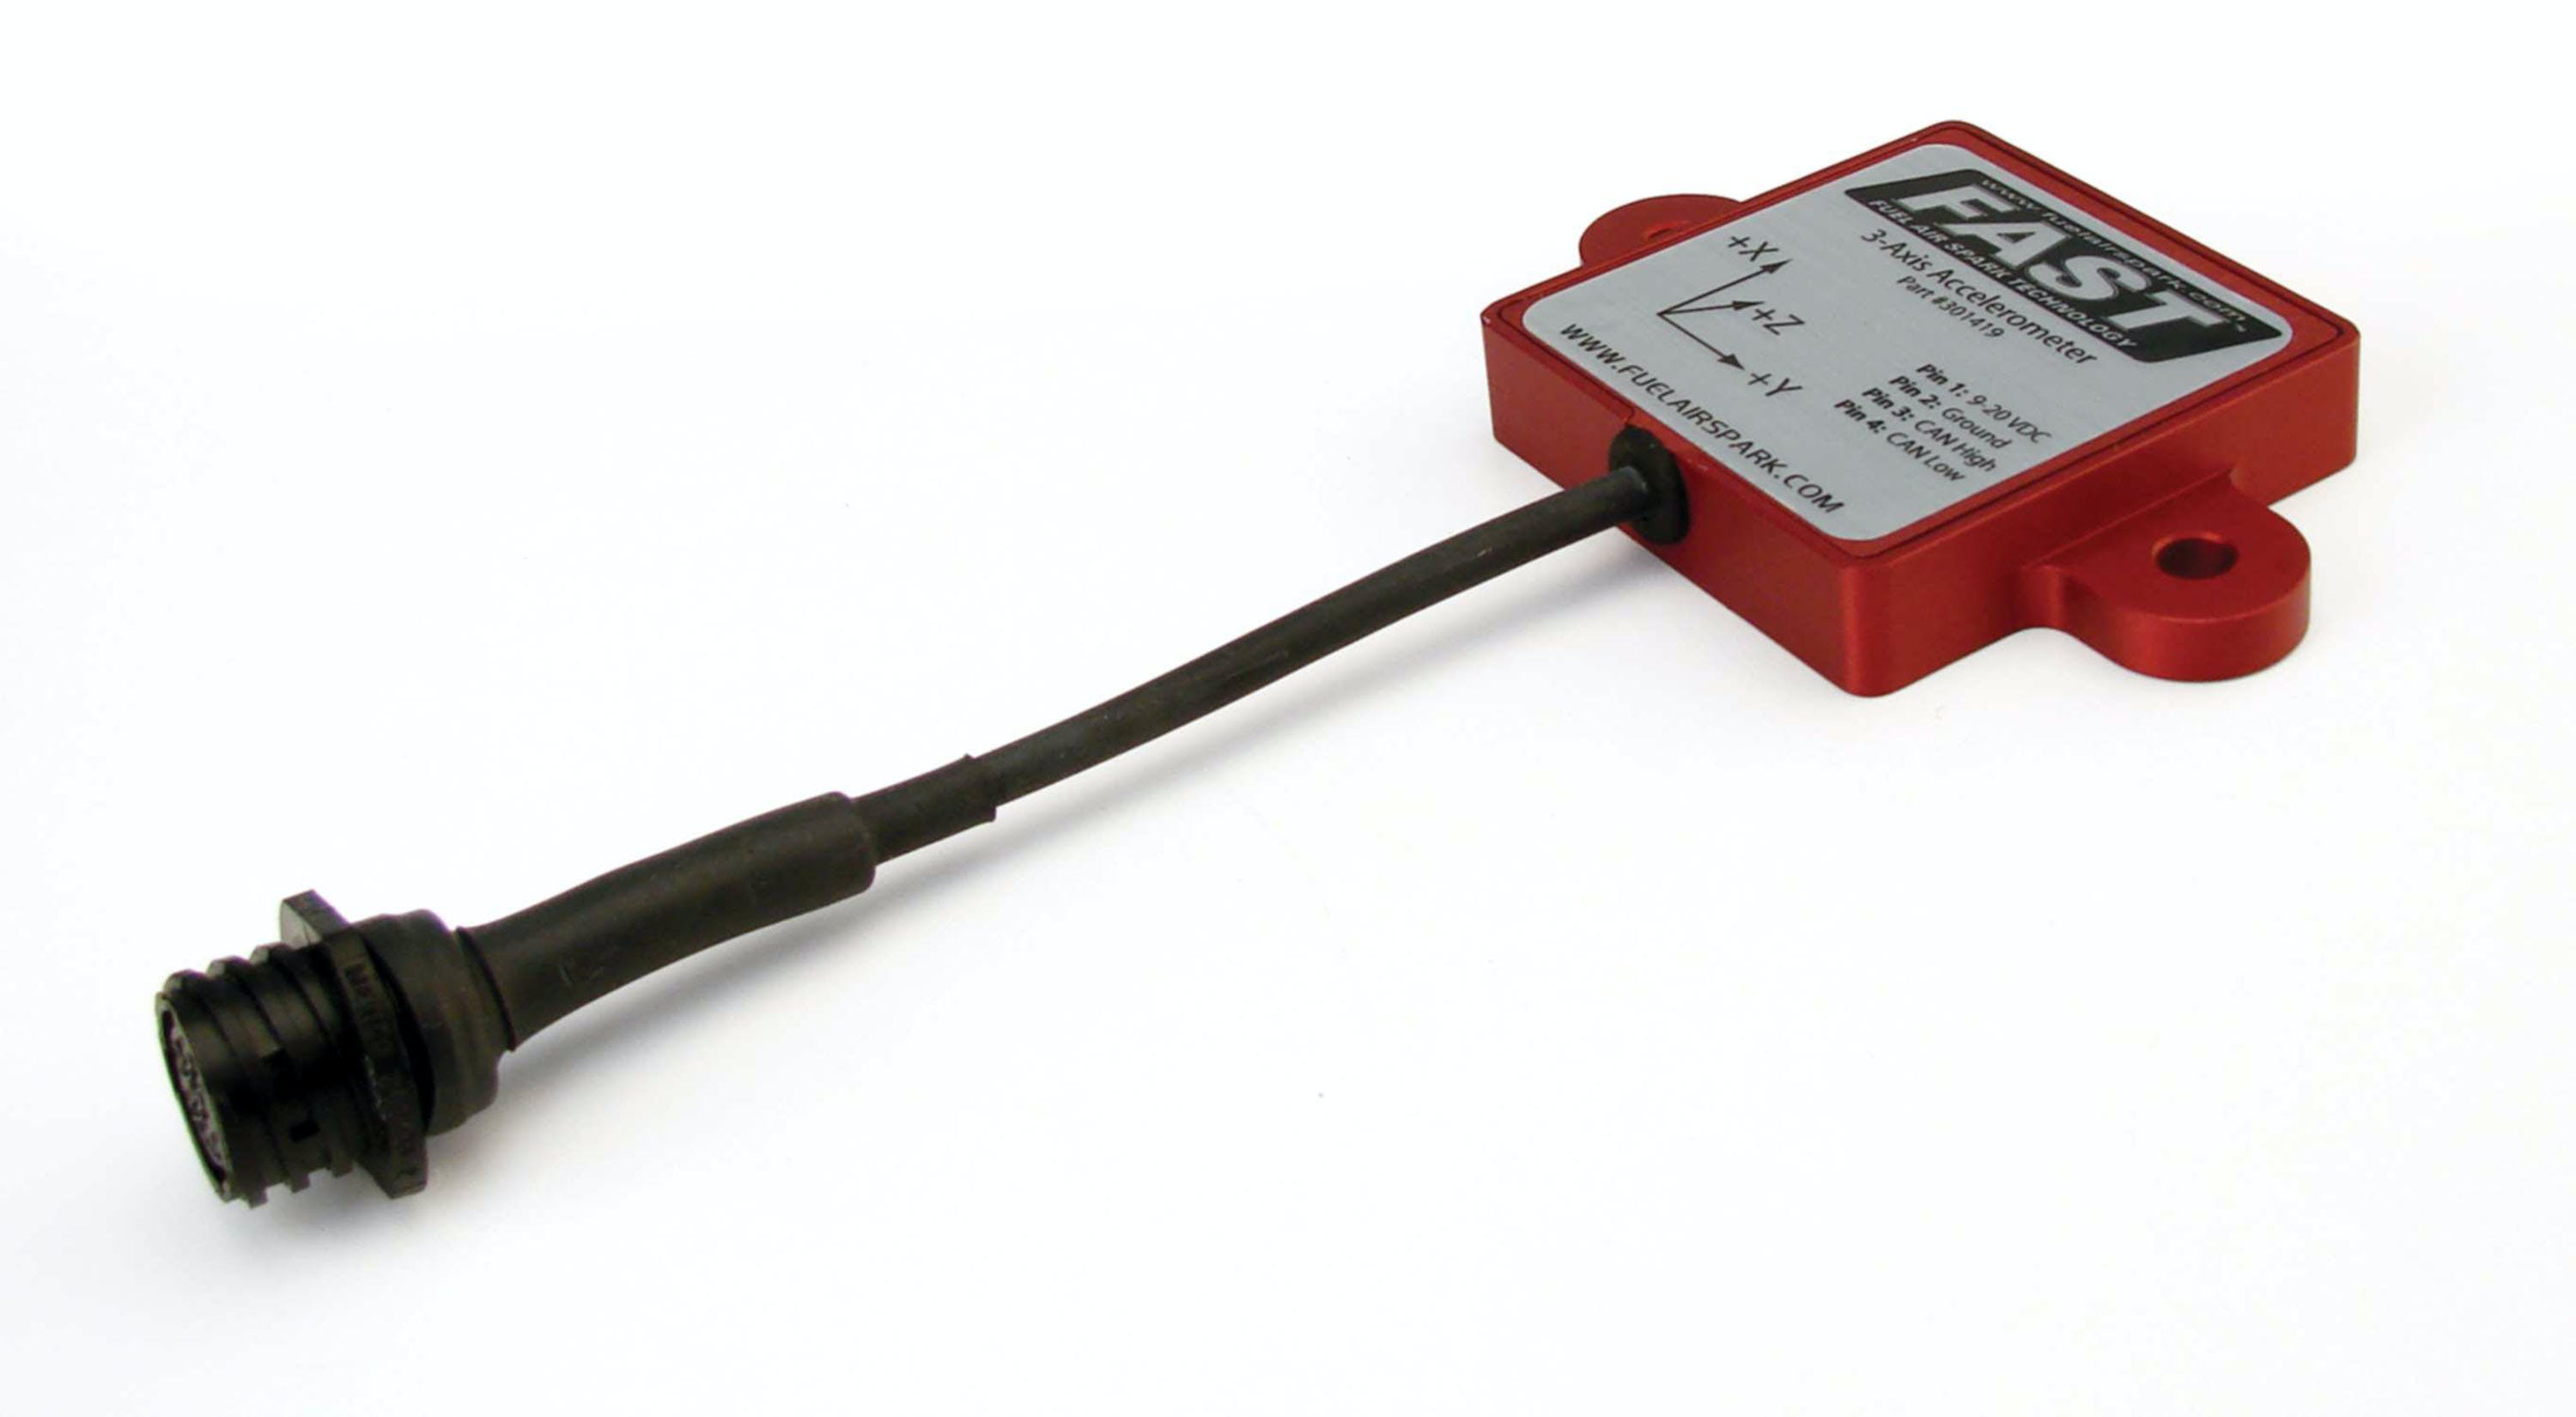 FAST - Fuel Air Spark Technology 301419 Accelerometer Kit